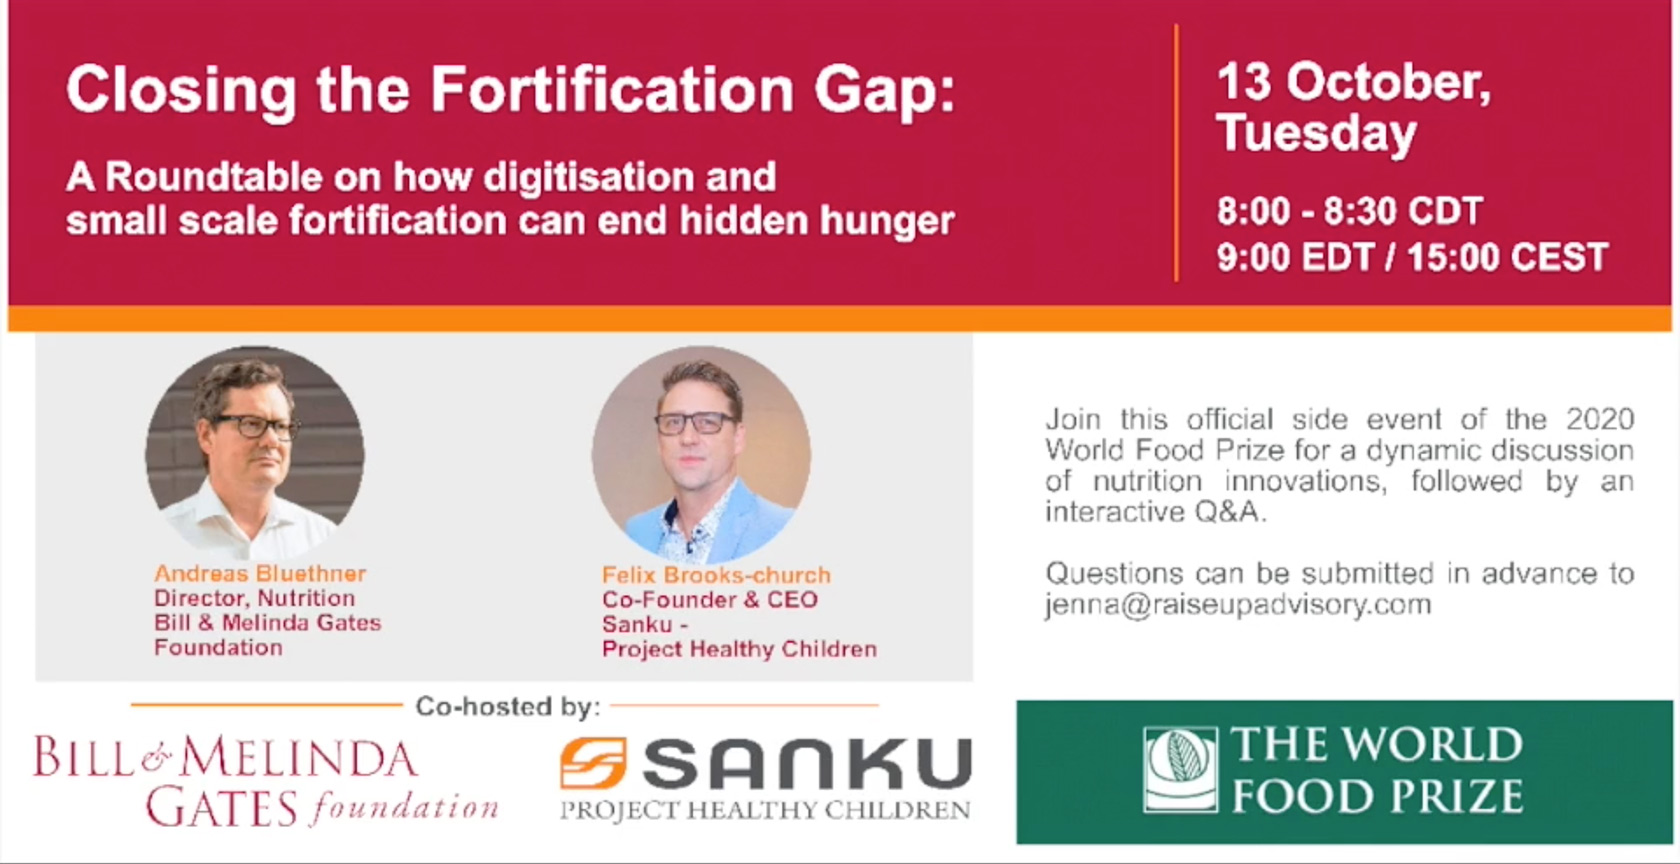 2020 World Food Prize side-event: Sanku and Bill & Melinda Gates Foundation